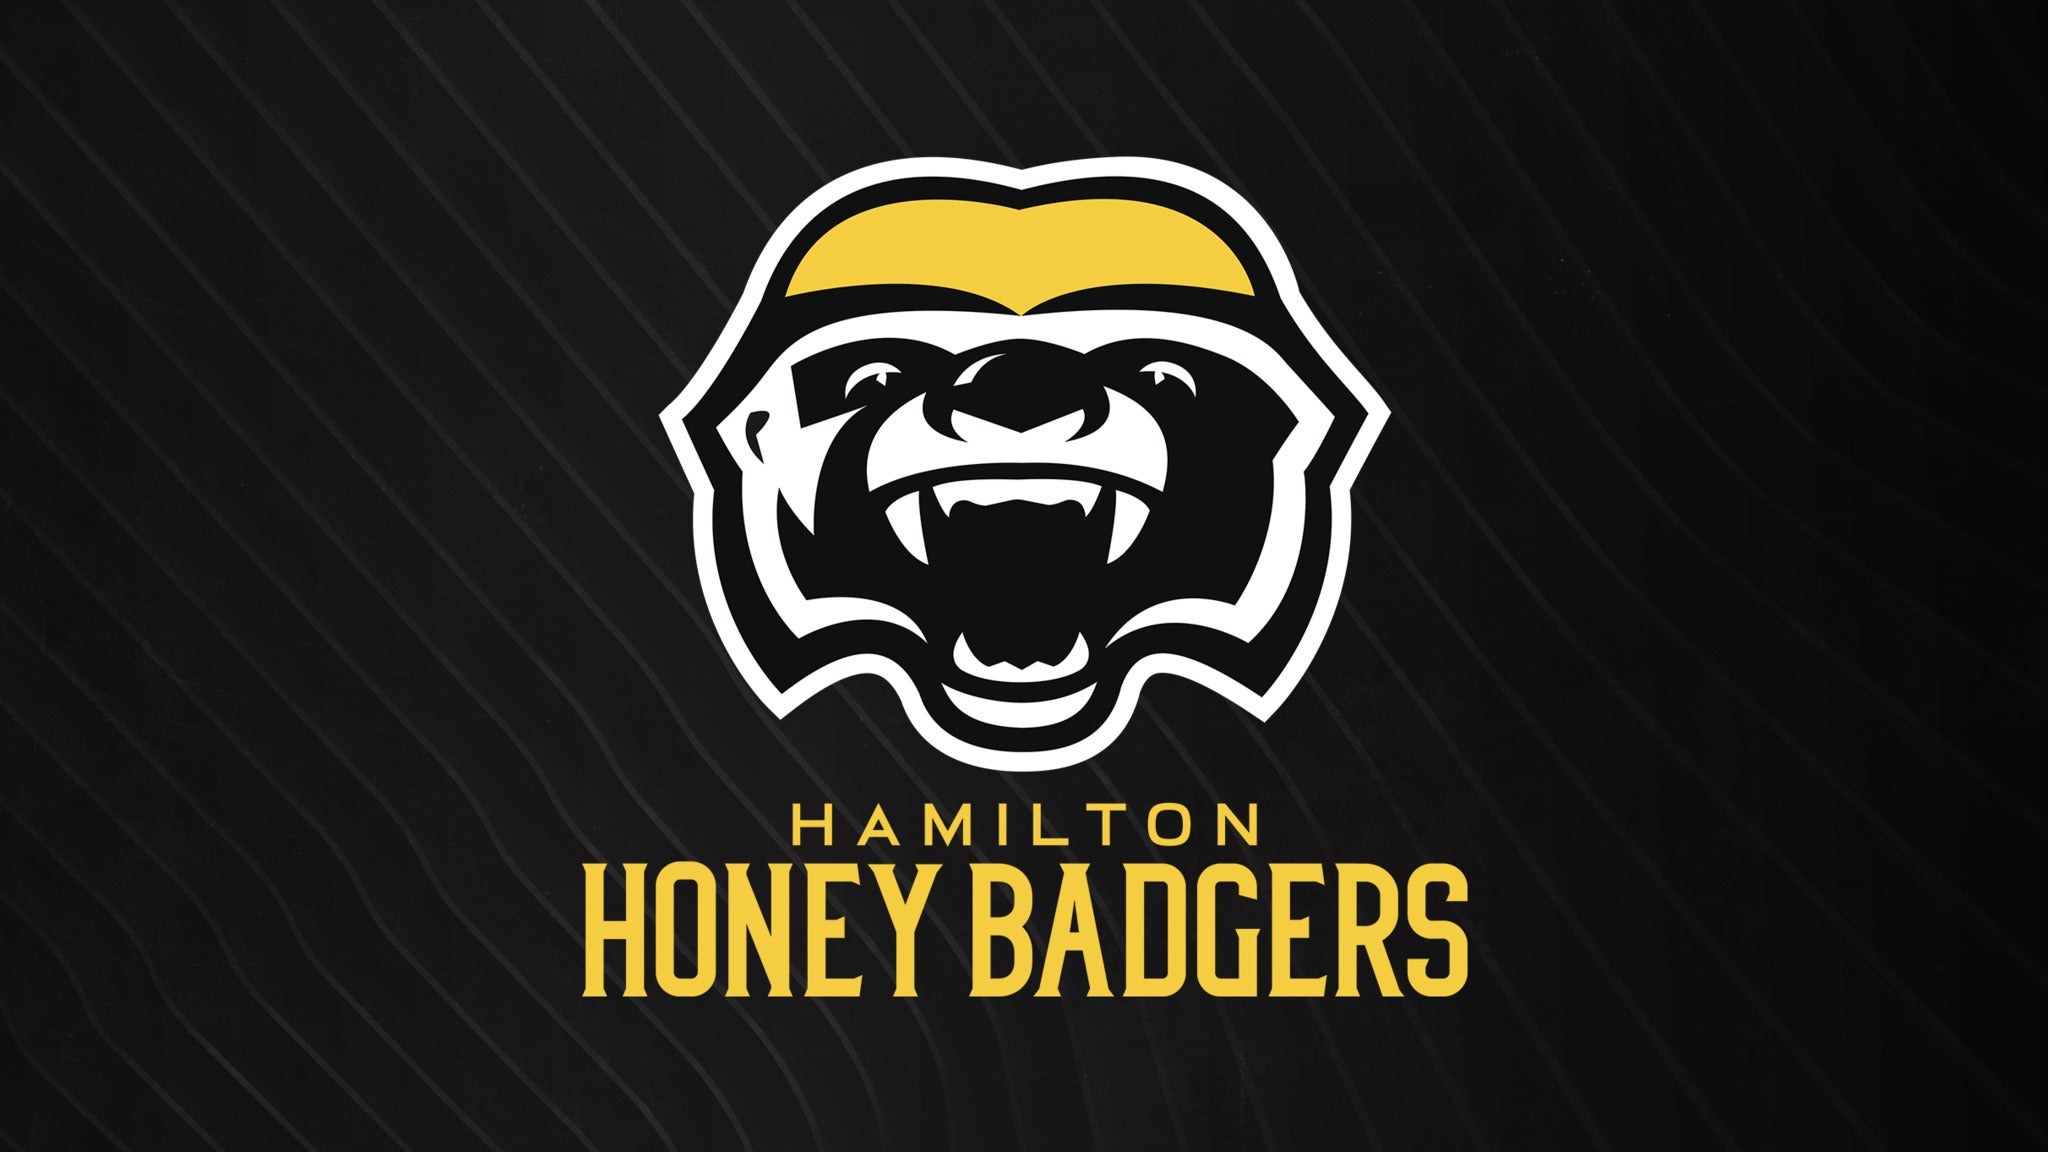 Hamilton Honey Badgers vs. Saskatchewan Rattlers in Hamilton promo photo for Ticketmaster presale offer code